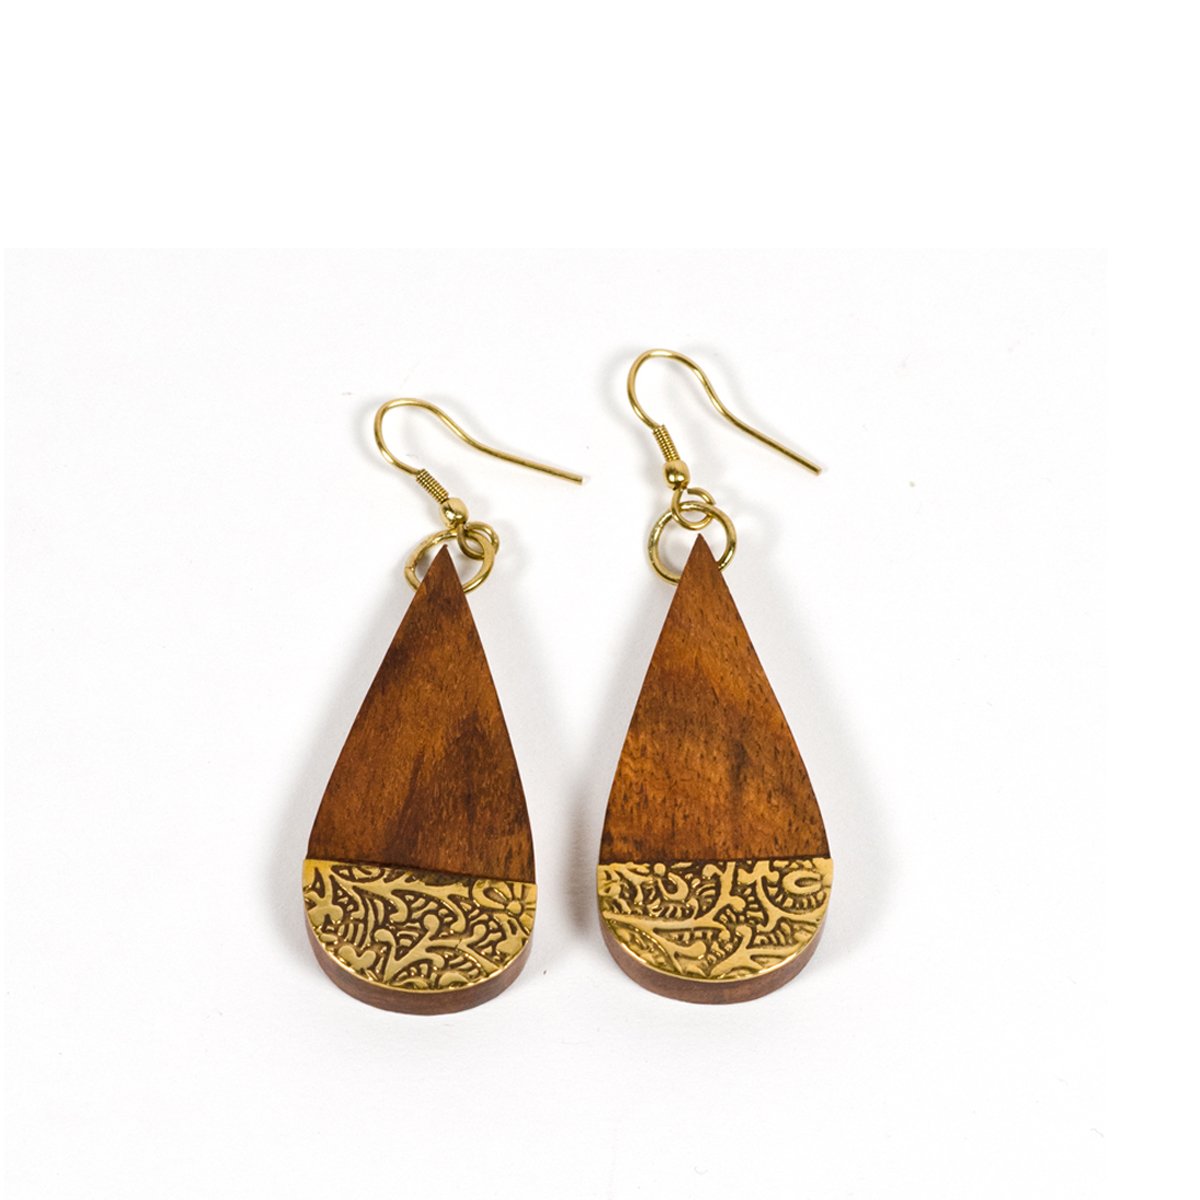 Angelco Accessories Rosewood & brass teardrop earrings